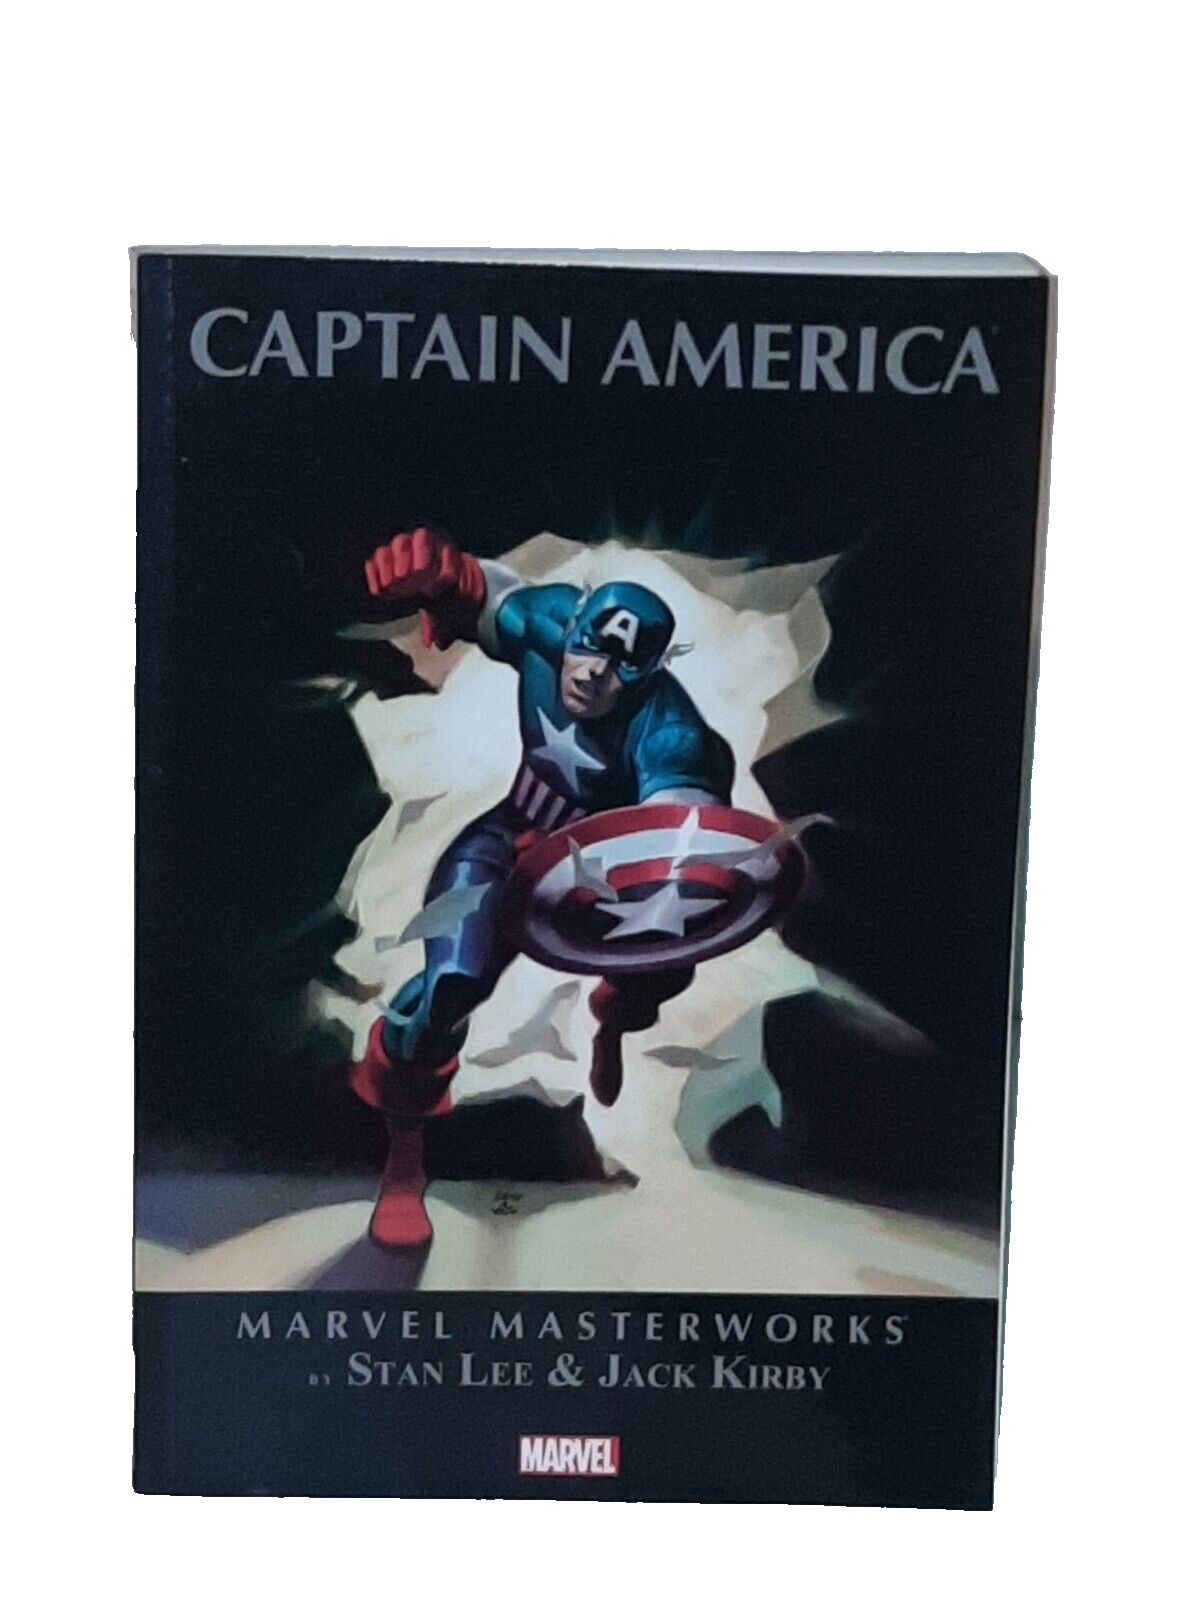 Marvel Masterworks: Captain America Volume 1 Marvel Comics 2010 TPB Stan Lee